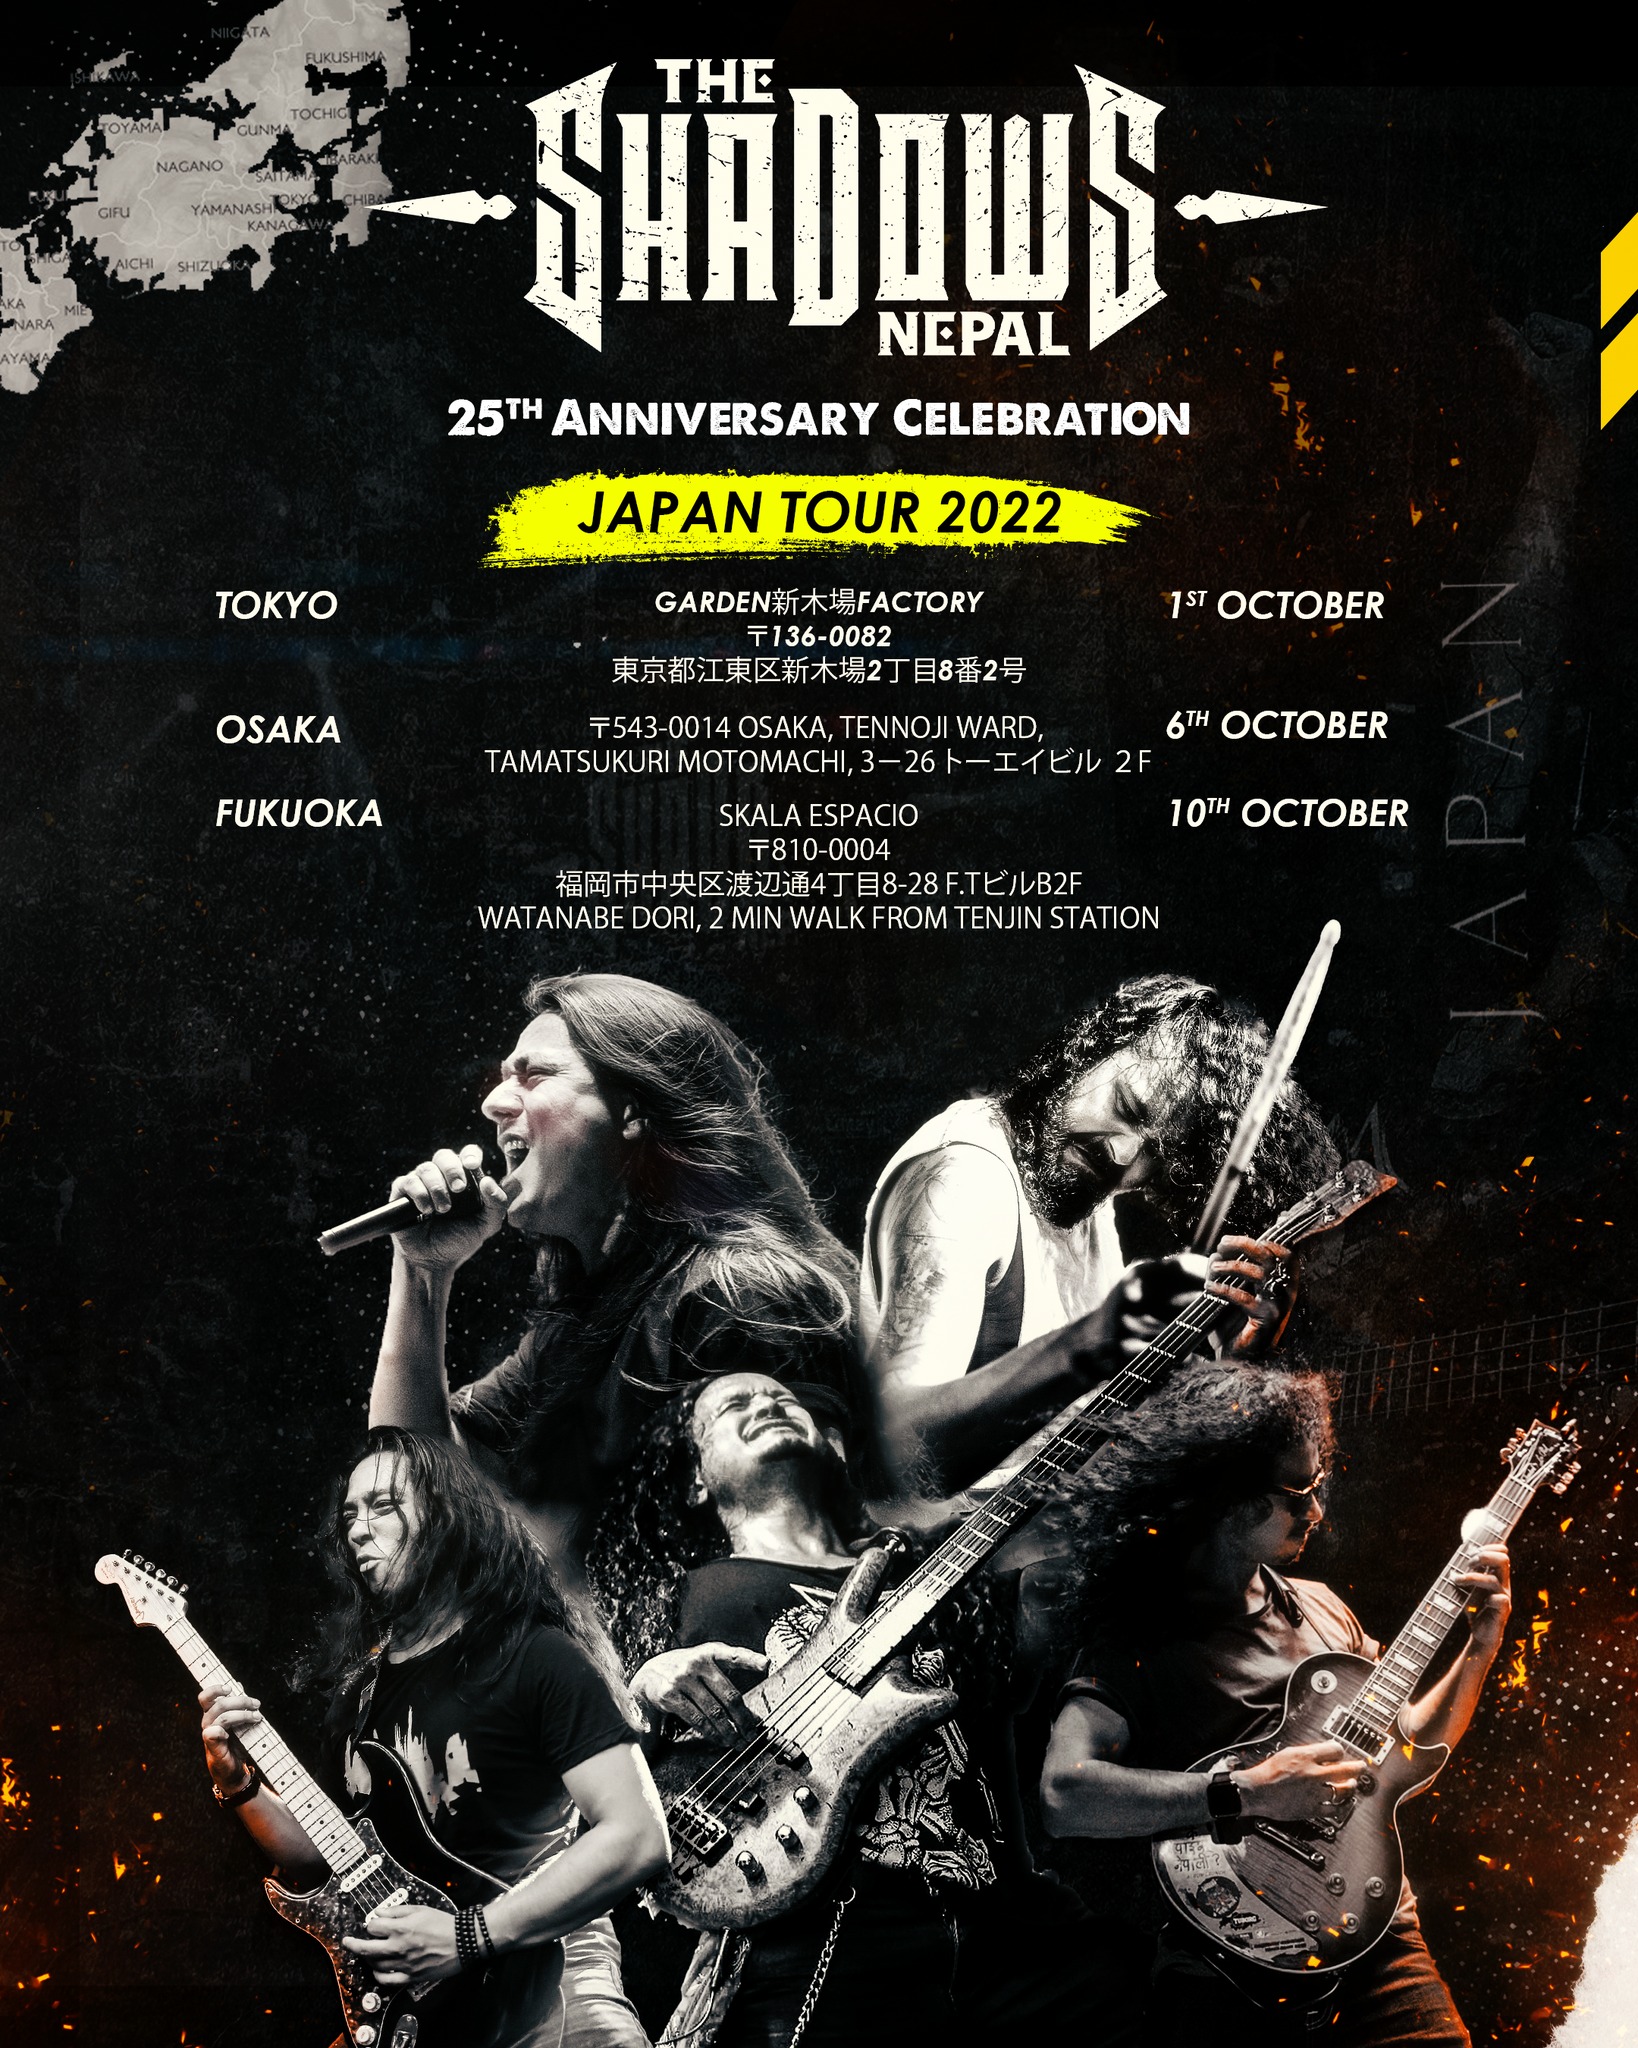 “The Shadows ‘Nepal’ Japan Tour 2022”